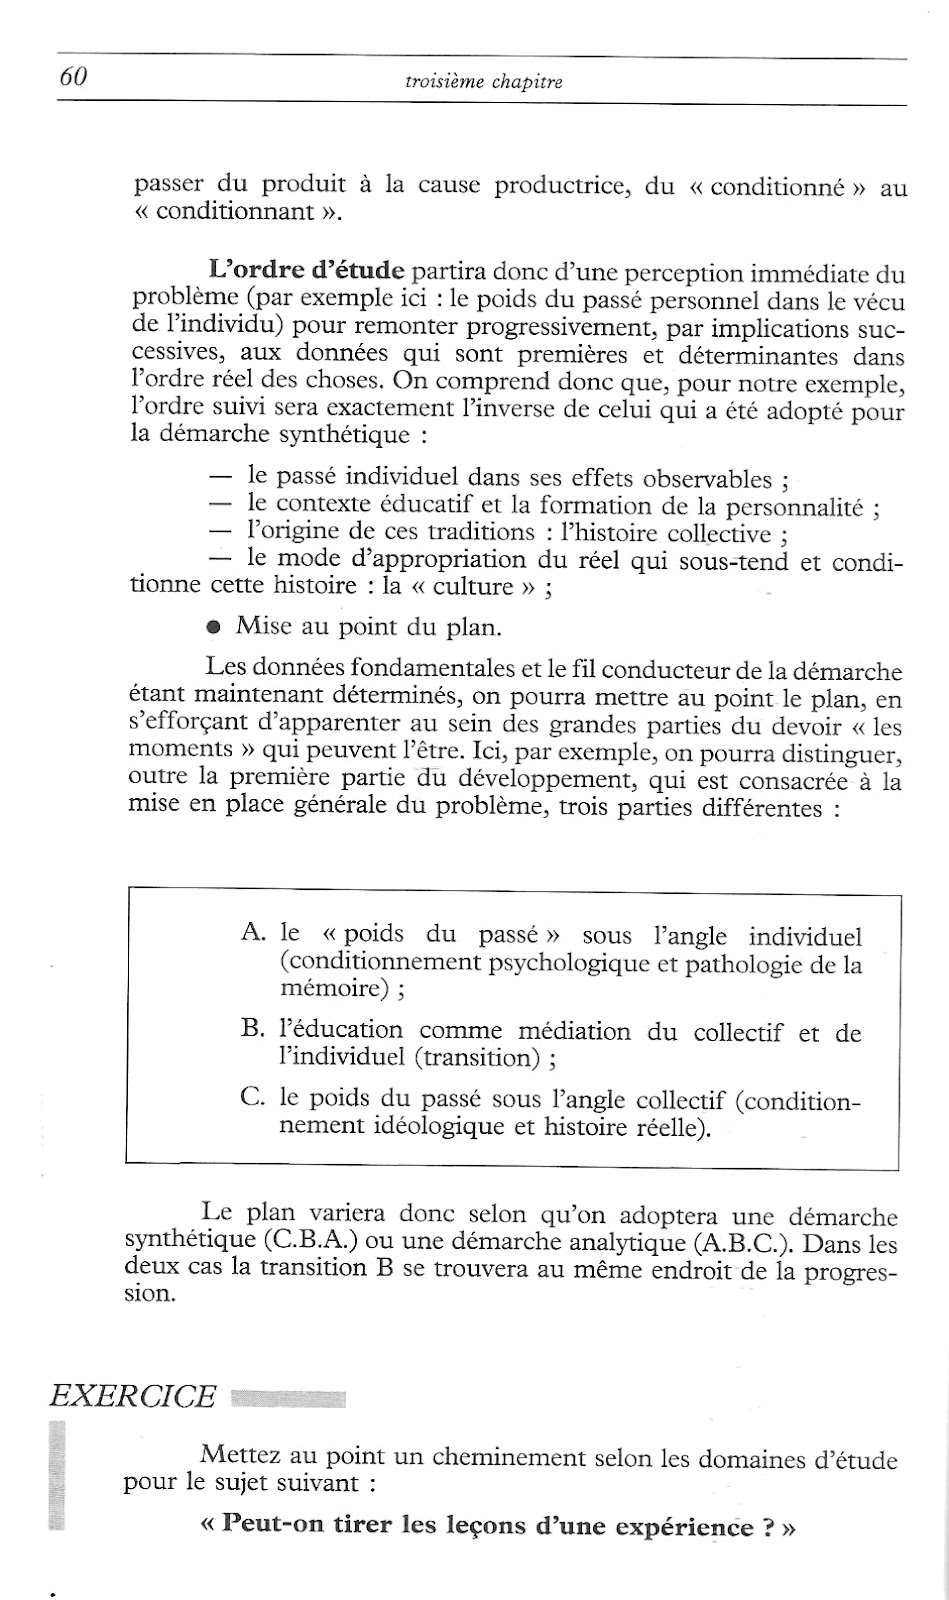 Manuels anciens: Pena-Ruiz, La Dissertation de philosophie ...